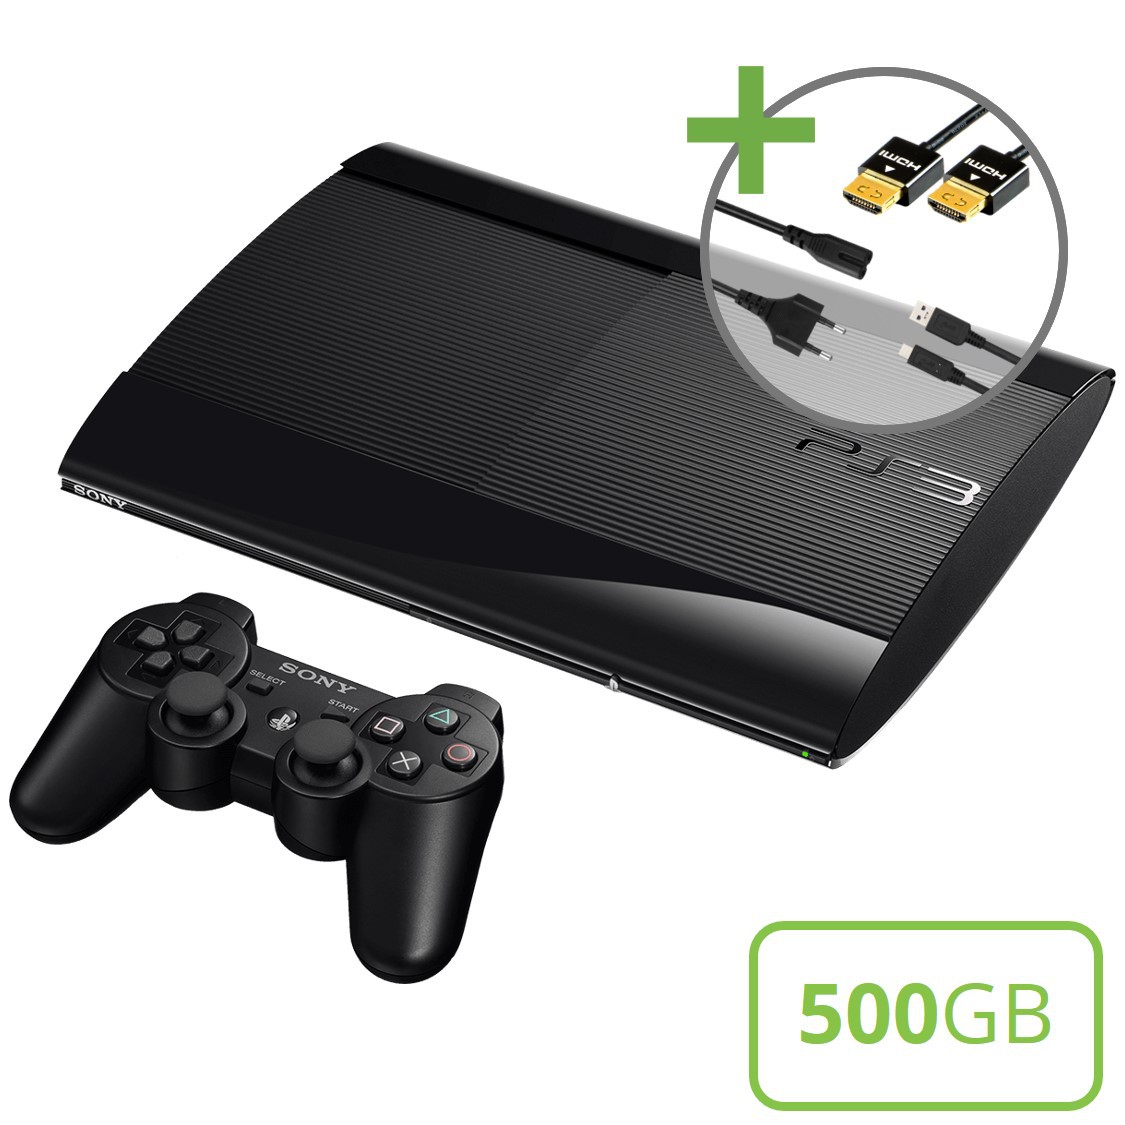 Sony PlayStation 3 Super Slim (500GB) Starter Pack - DualShock Edition Kopen | Playstation 3 Hardware